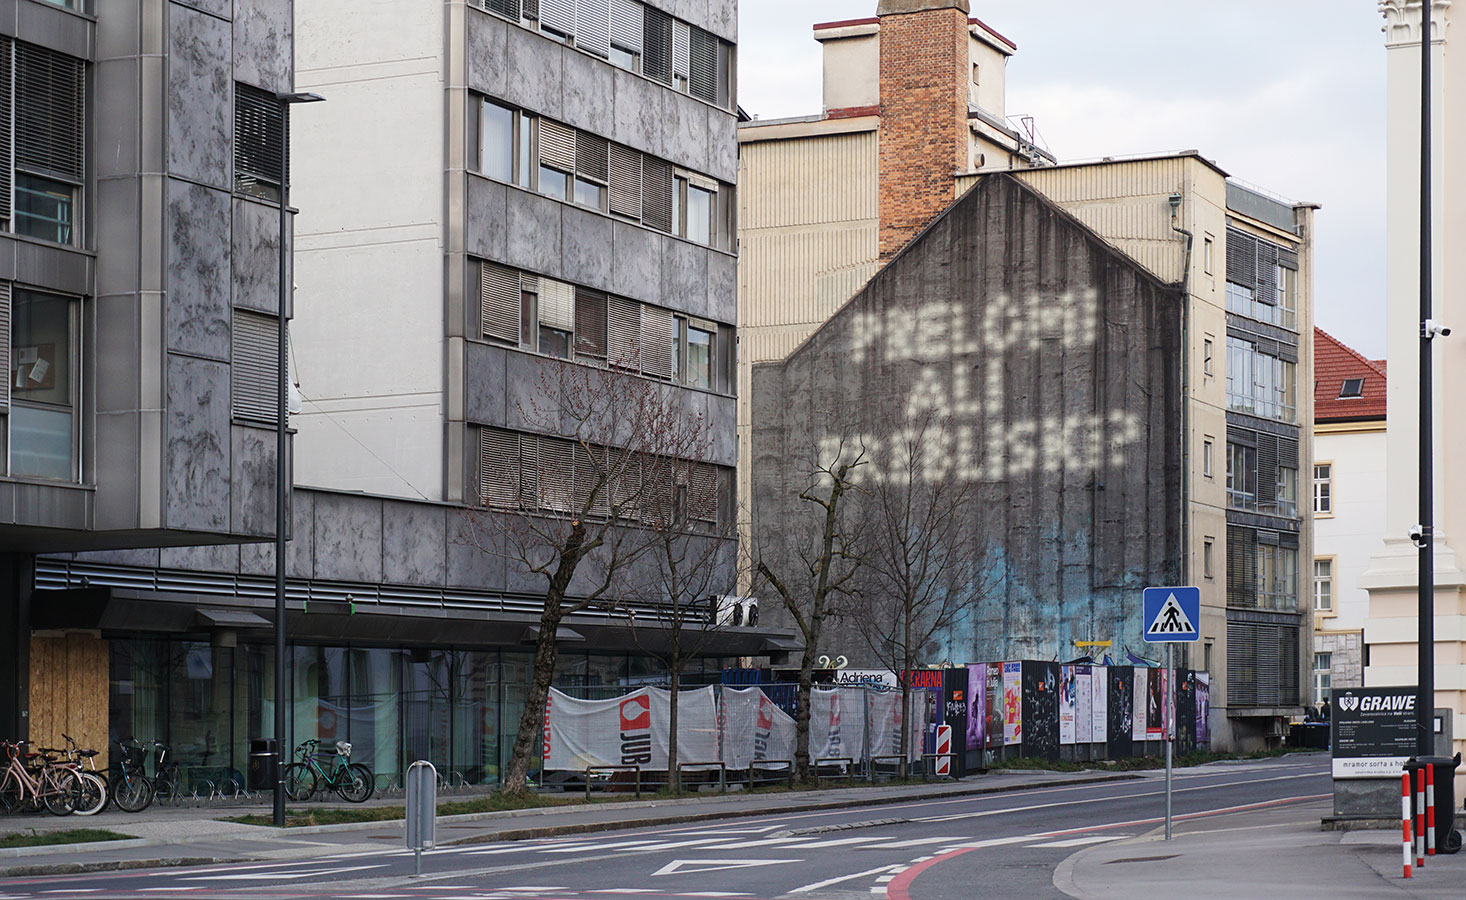 Danilo Milovanović: Solar Mural #2 – Fissures or Flashes?